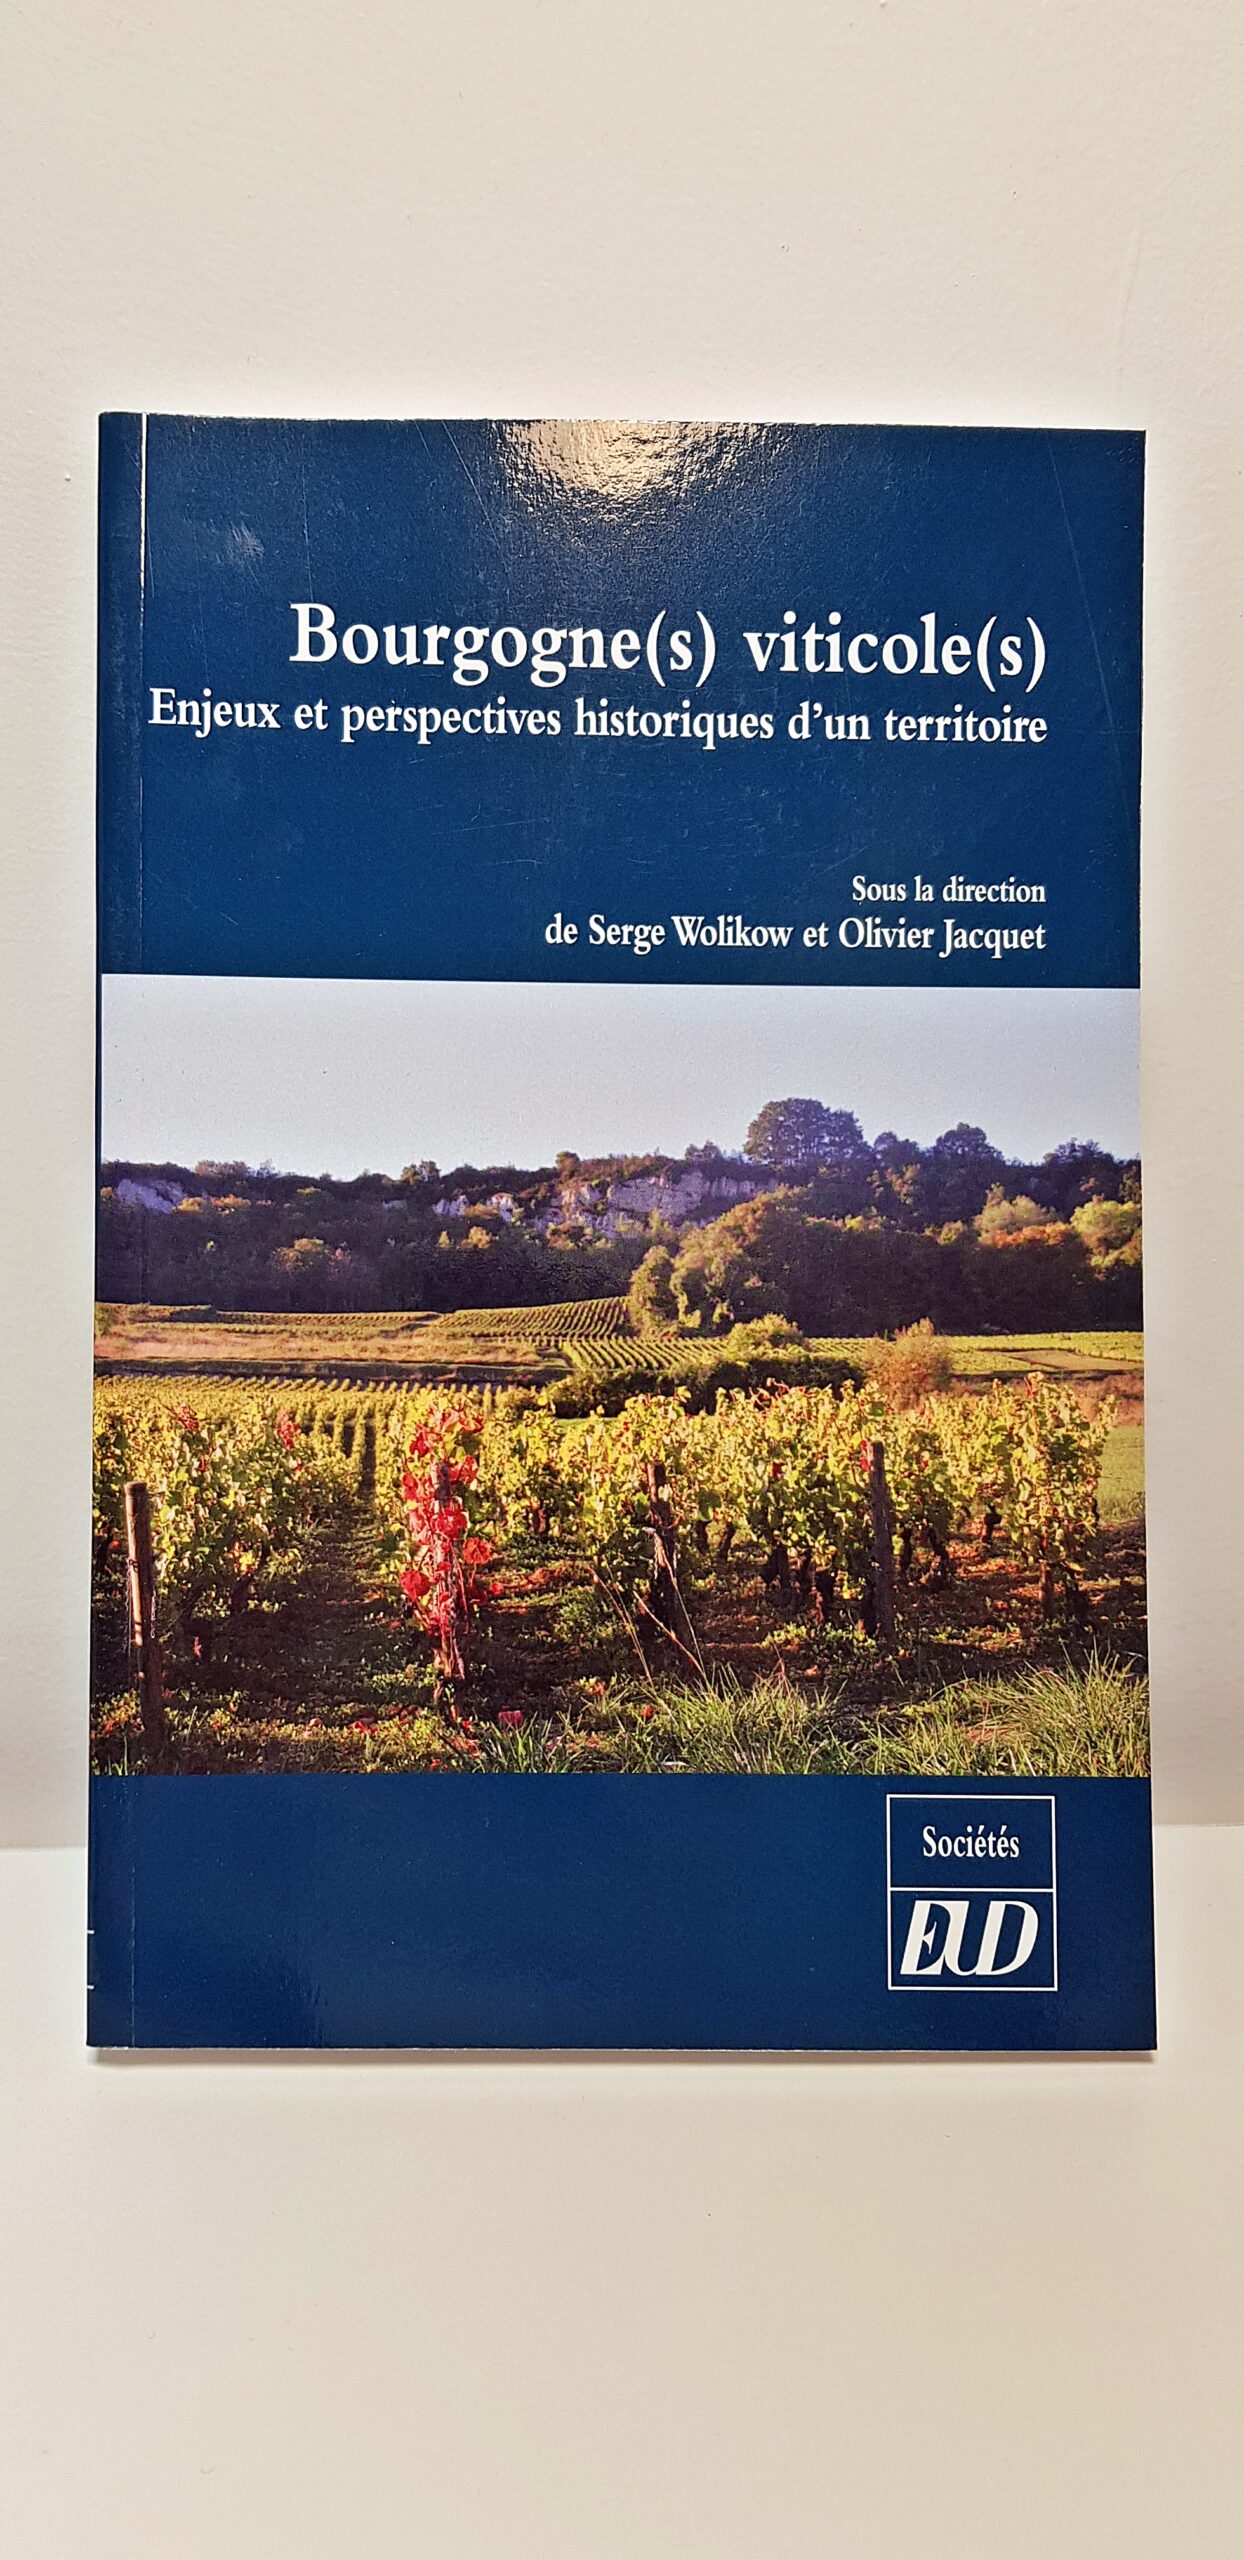 Livre ” Bourgogne(s) viticoles(s)” de Serge Wolikow